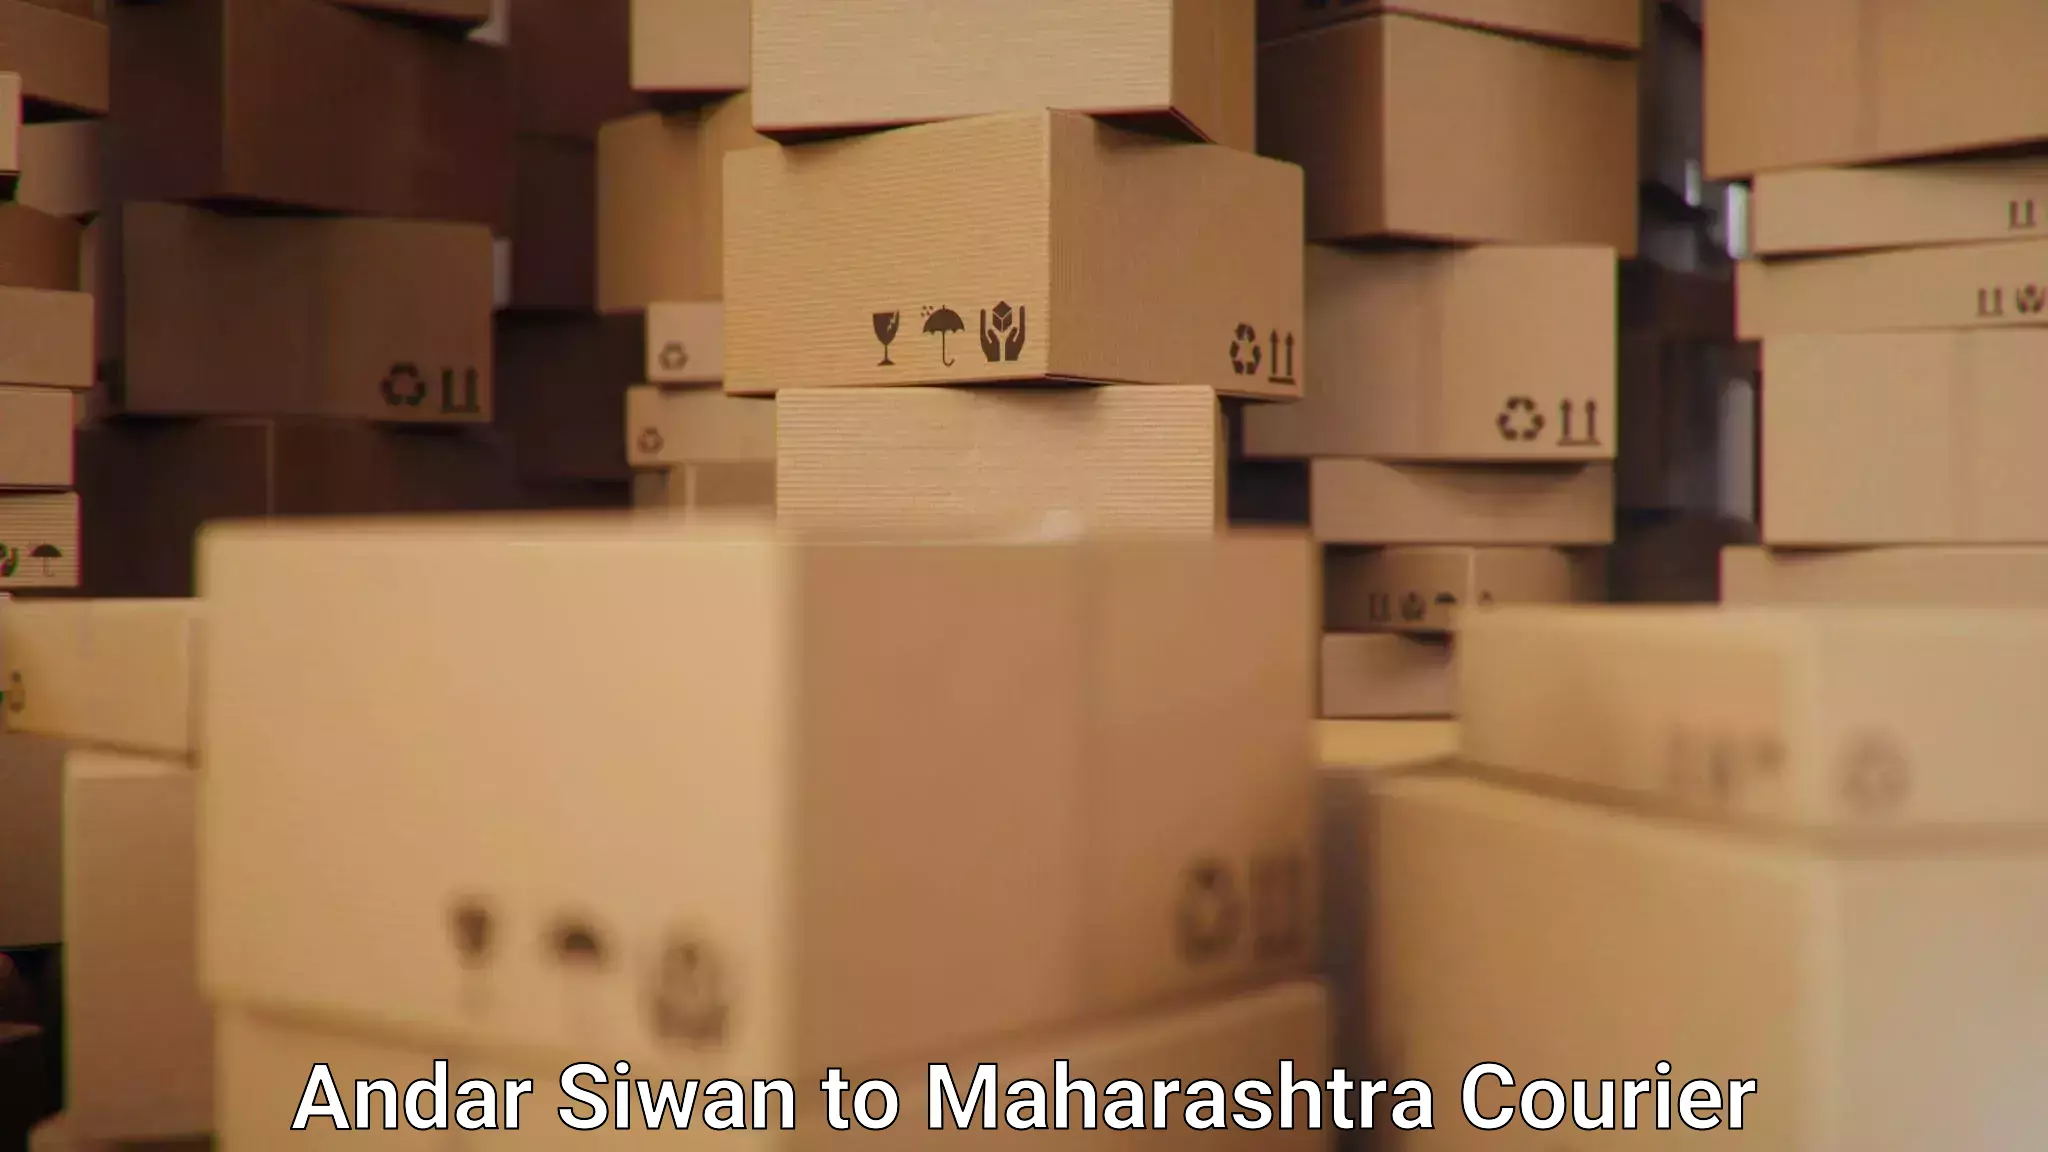 Courier membership Andar Siwan to Maharashtra